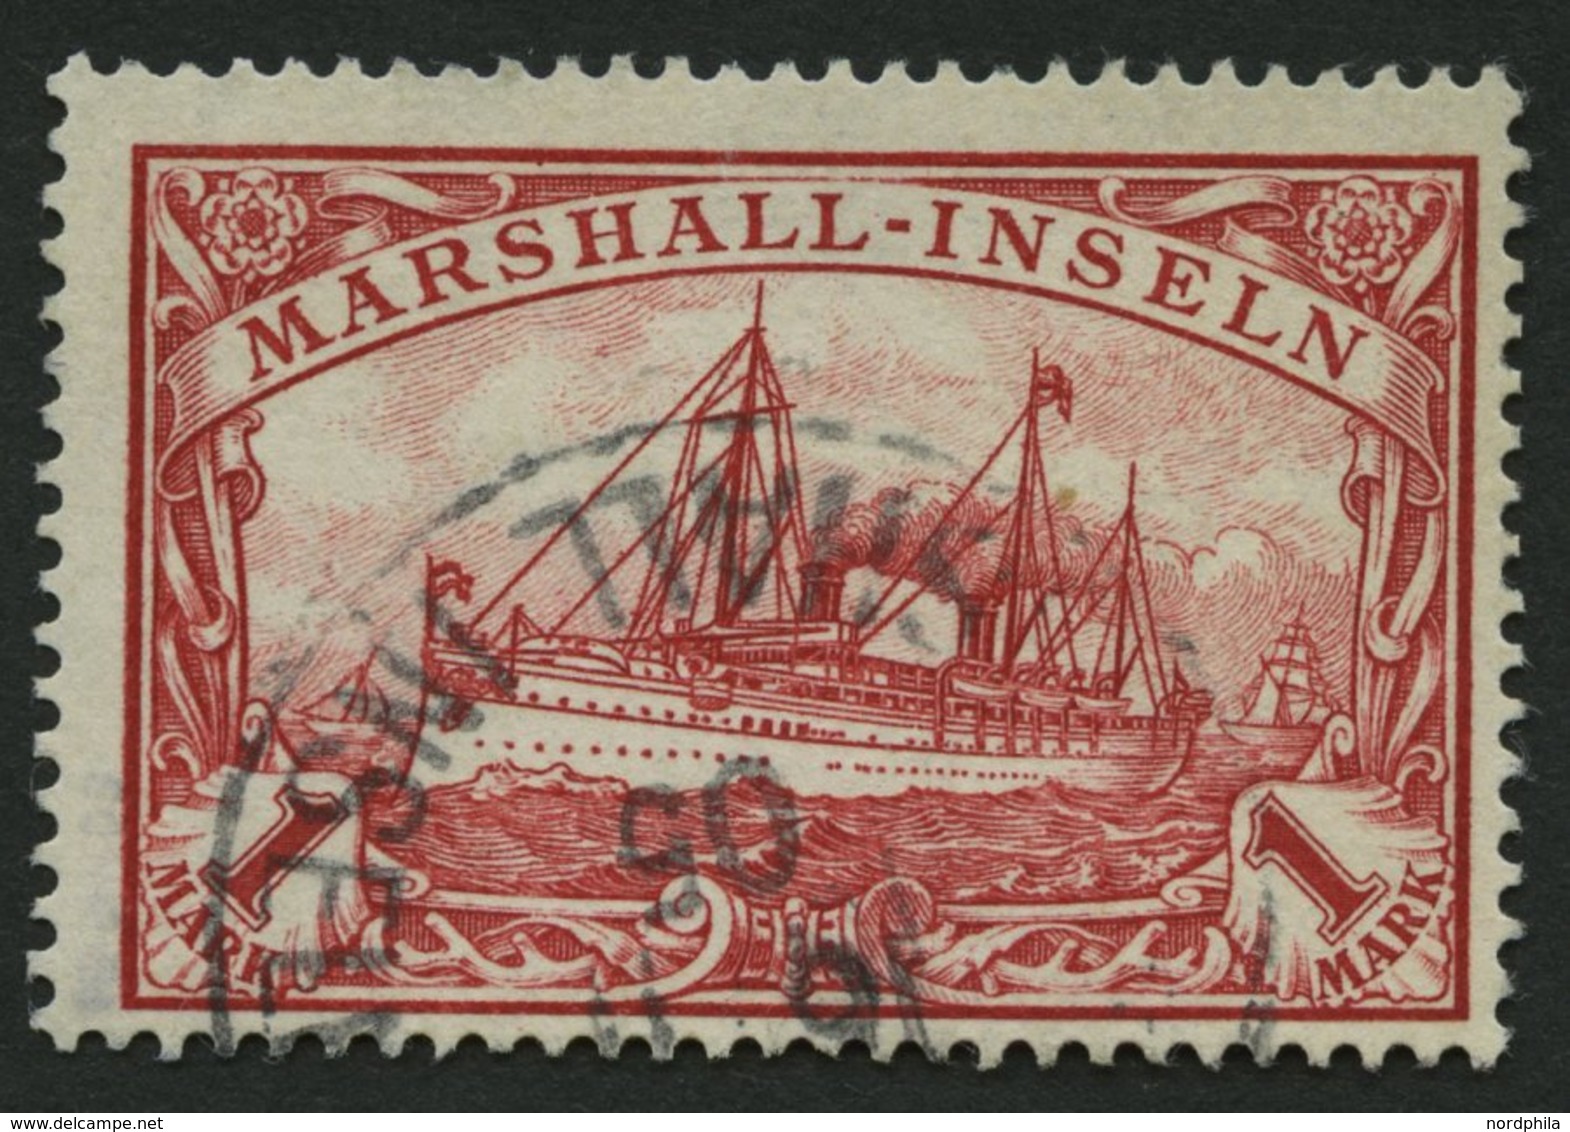 MARSHALL-INSELN 22 O, 1901, 1 M. Rot, Pracht, Gepr. Bothe, Mi. 100.- - Islas Marshall